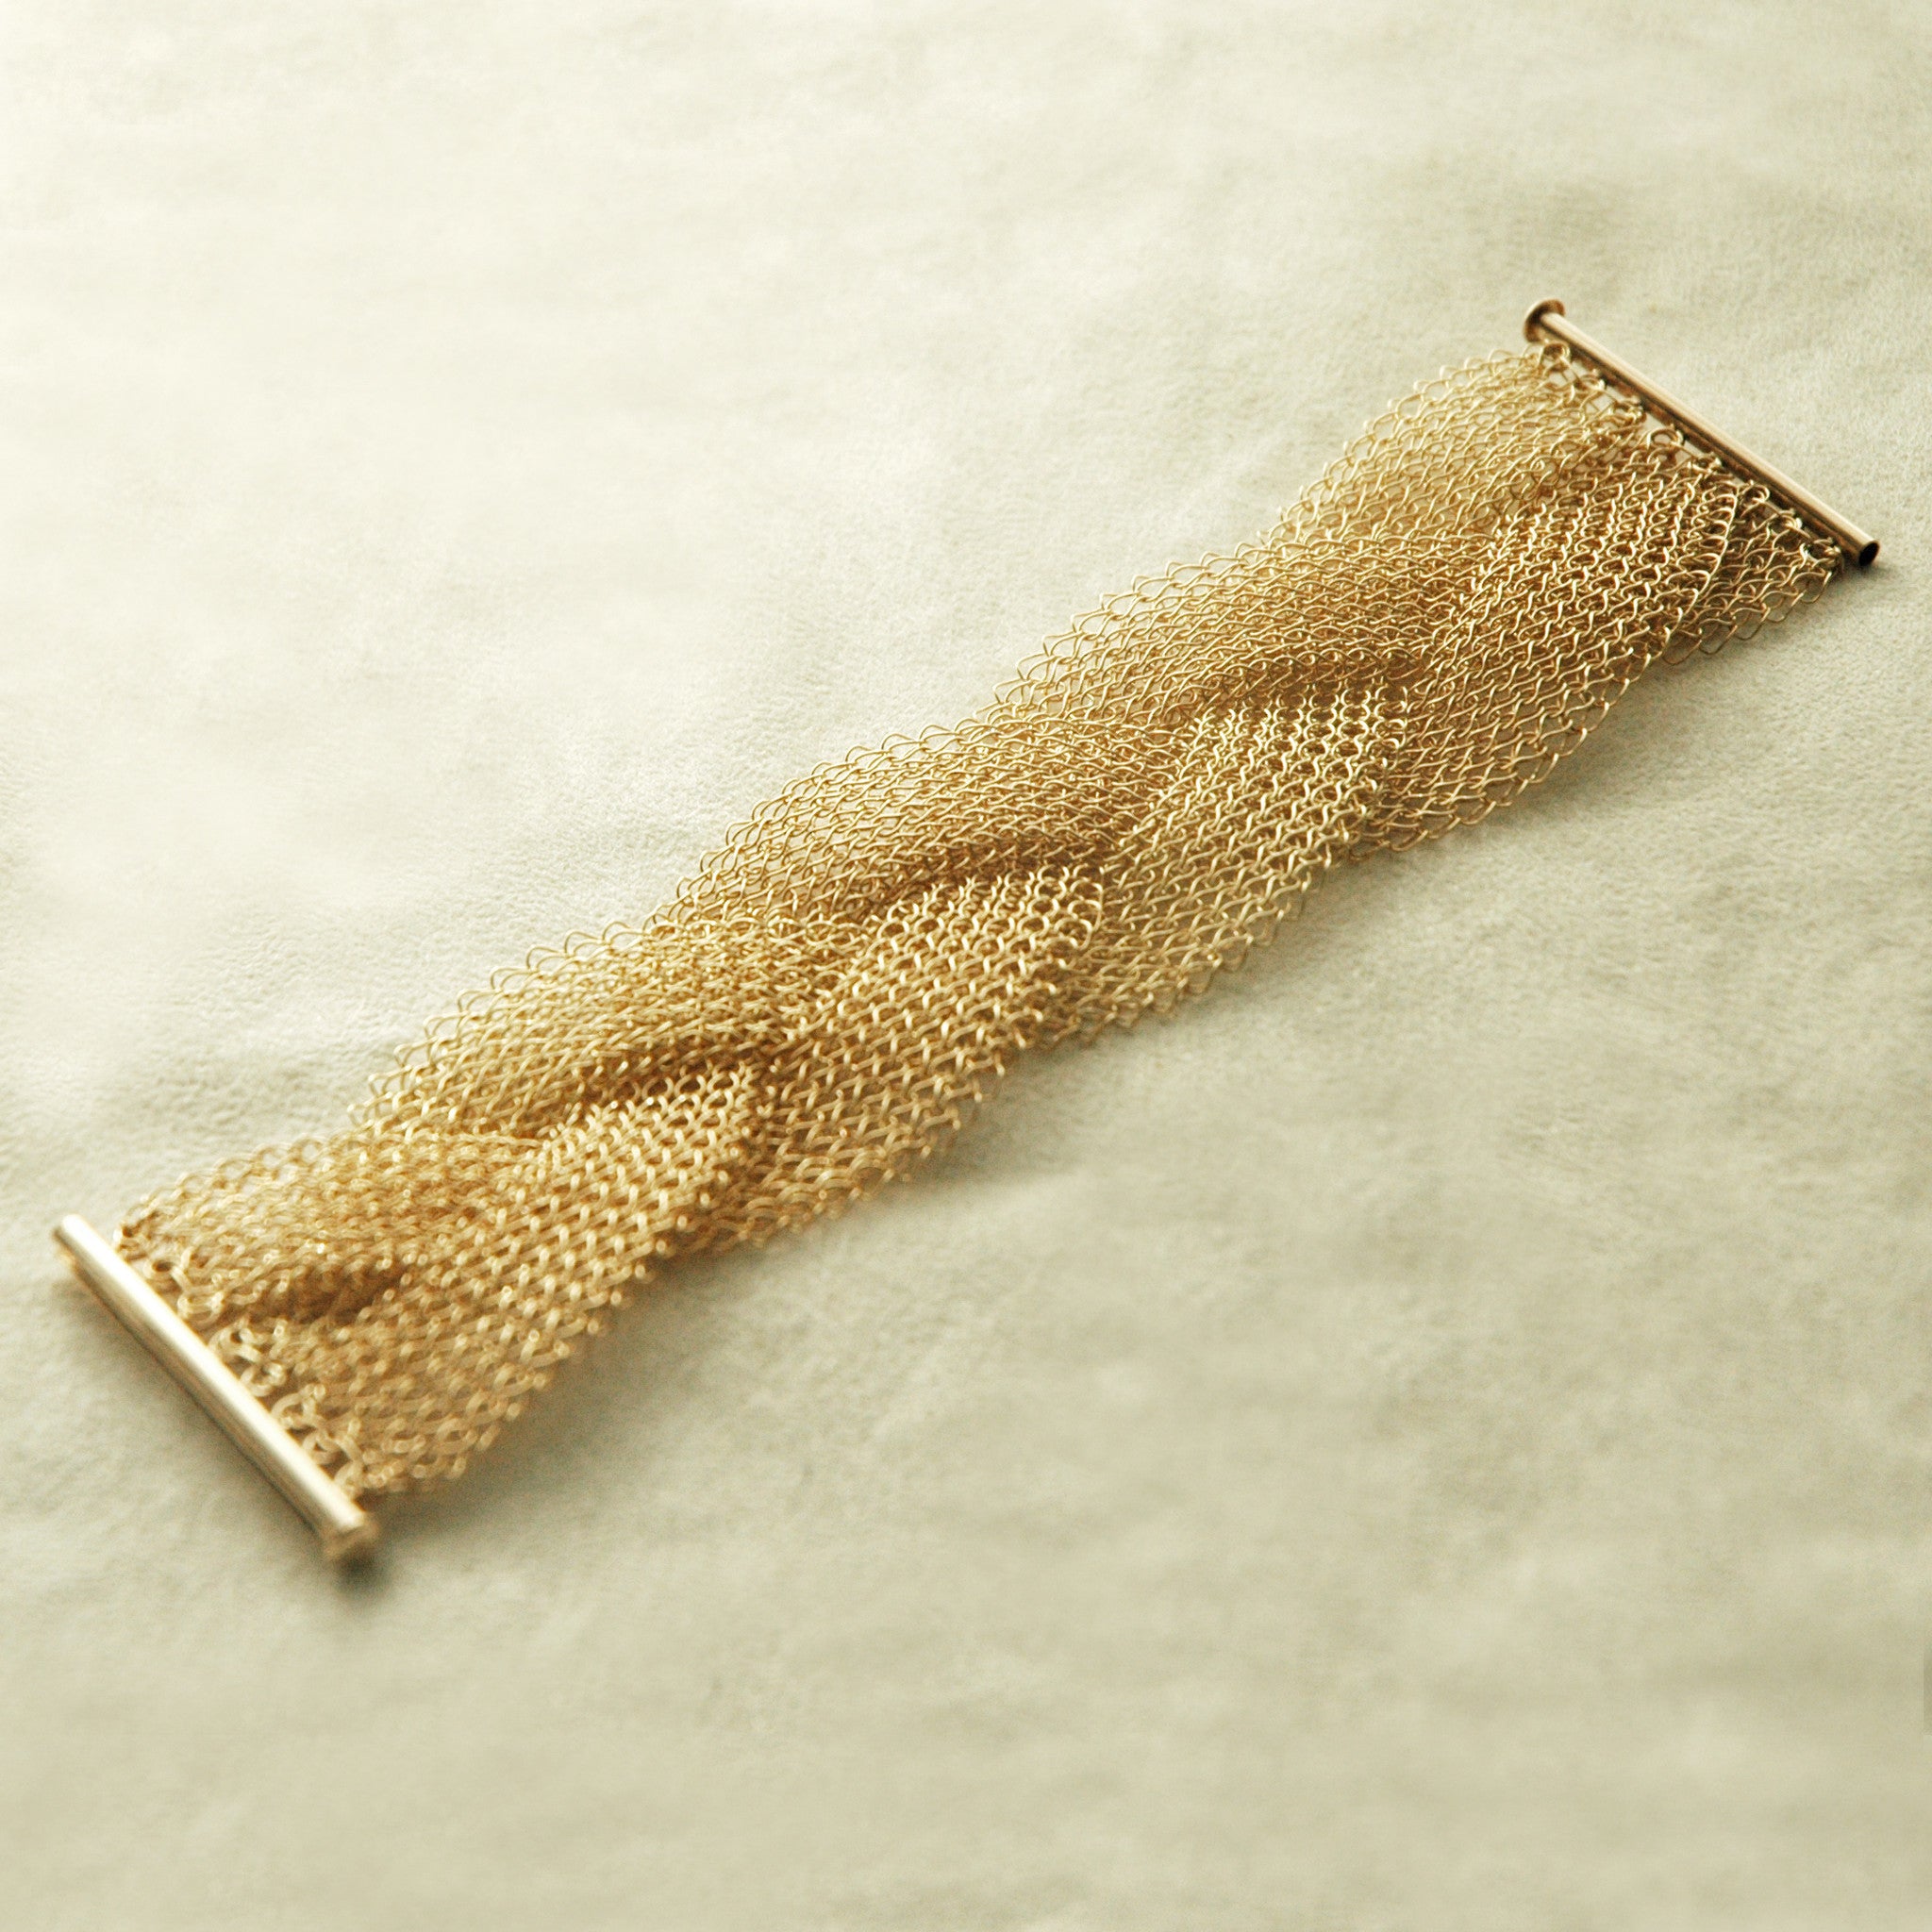 Braided Bracelet Patterns - Braid Bracelets with Beads – Nbeads